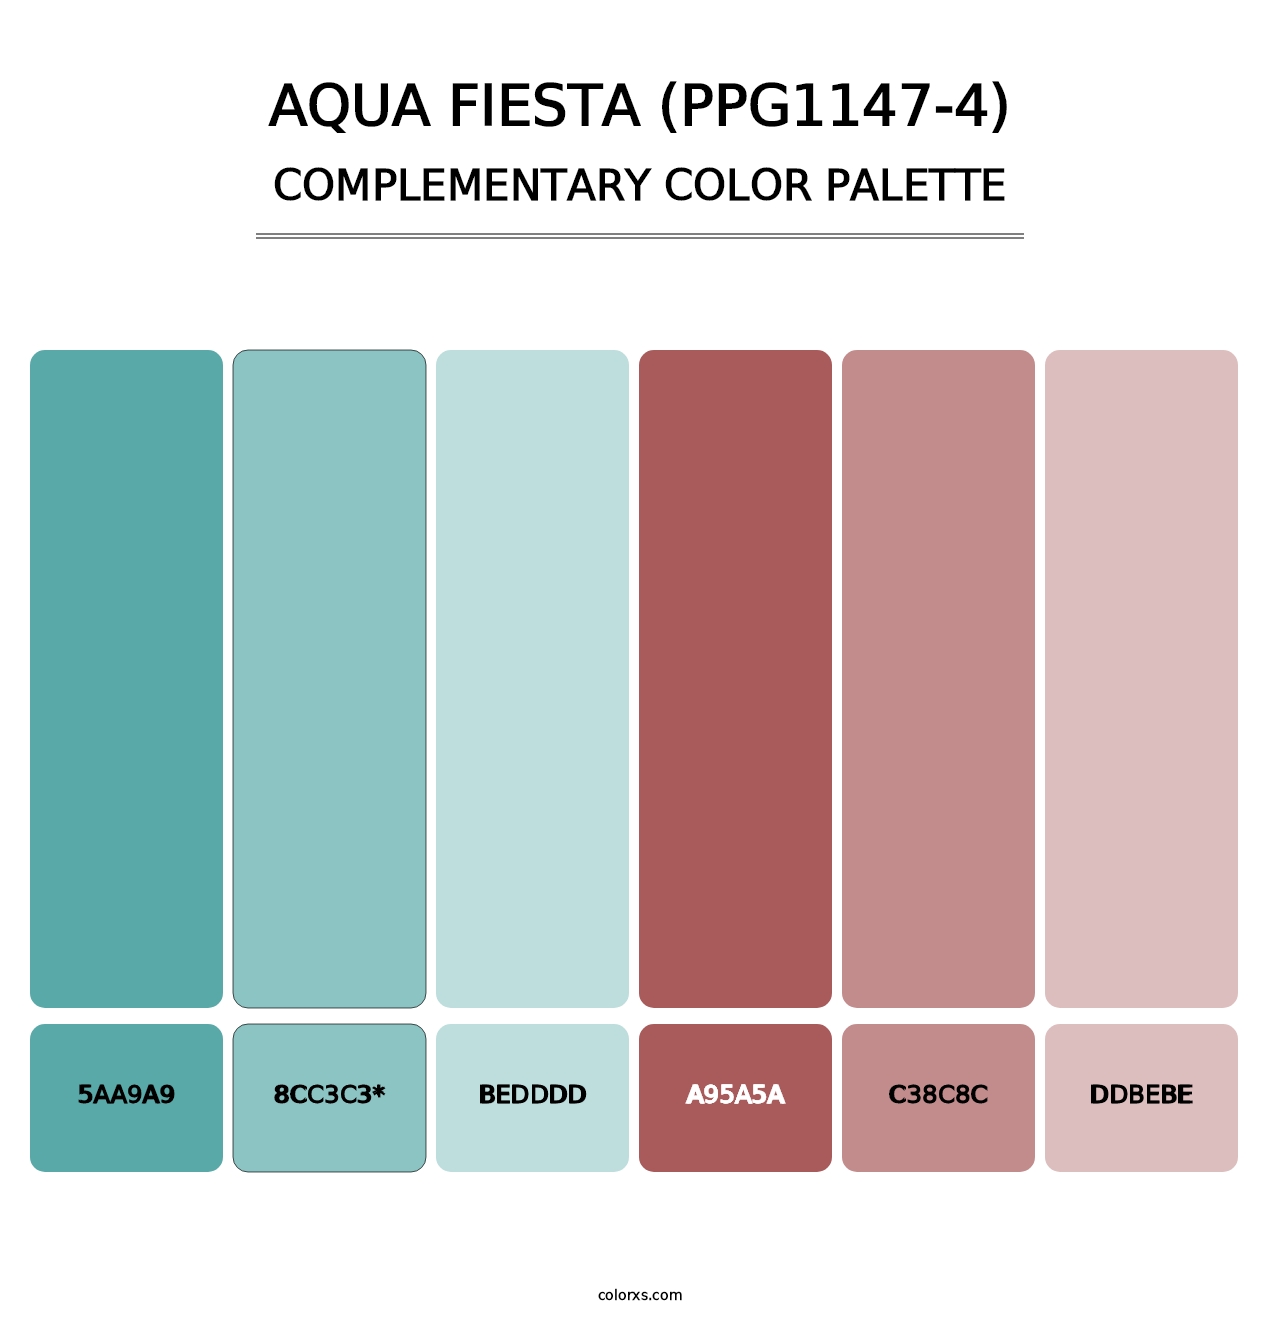 Aqua Fiesta (PPG1147-4) - Complementary Color Palette